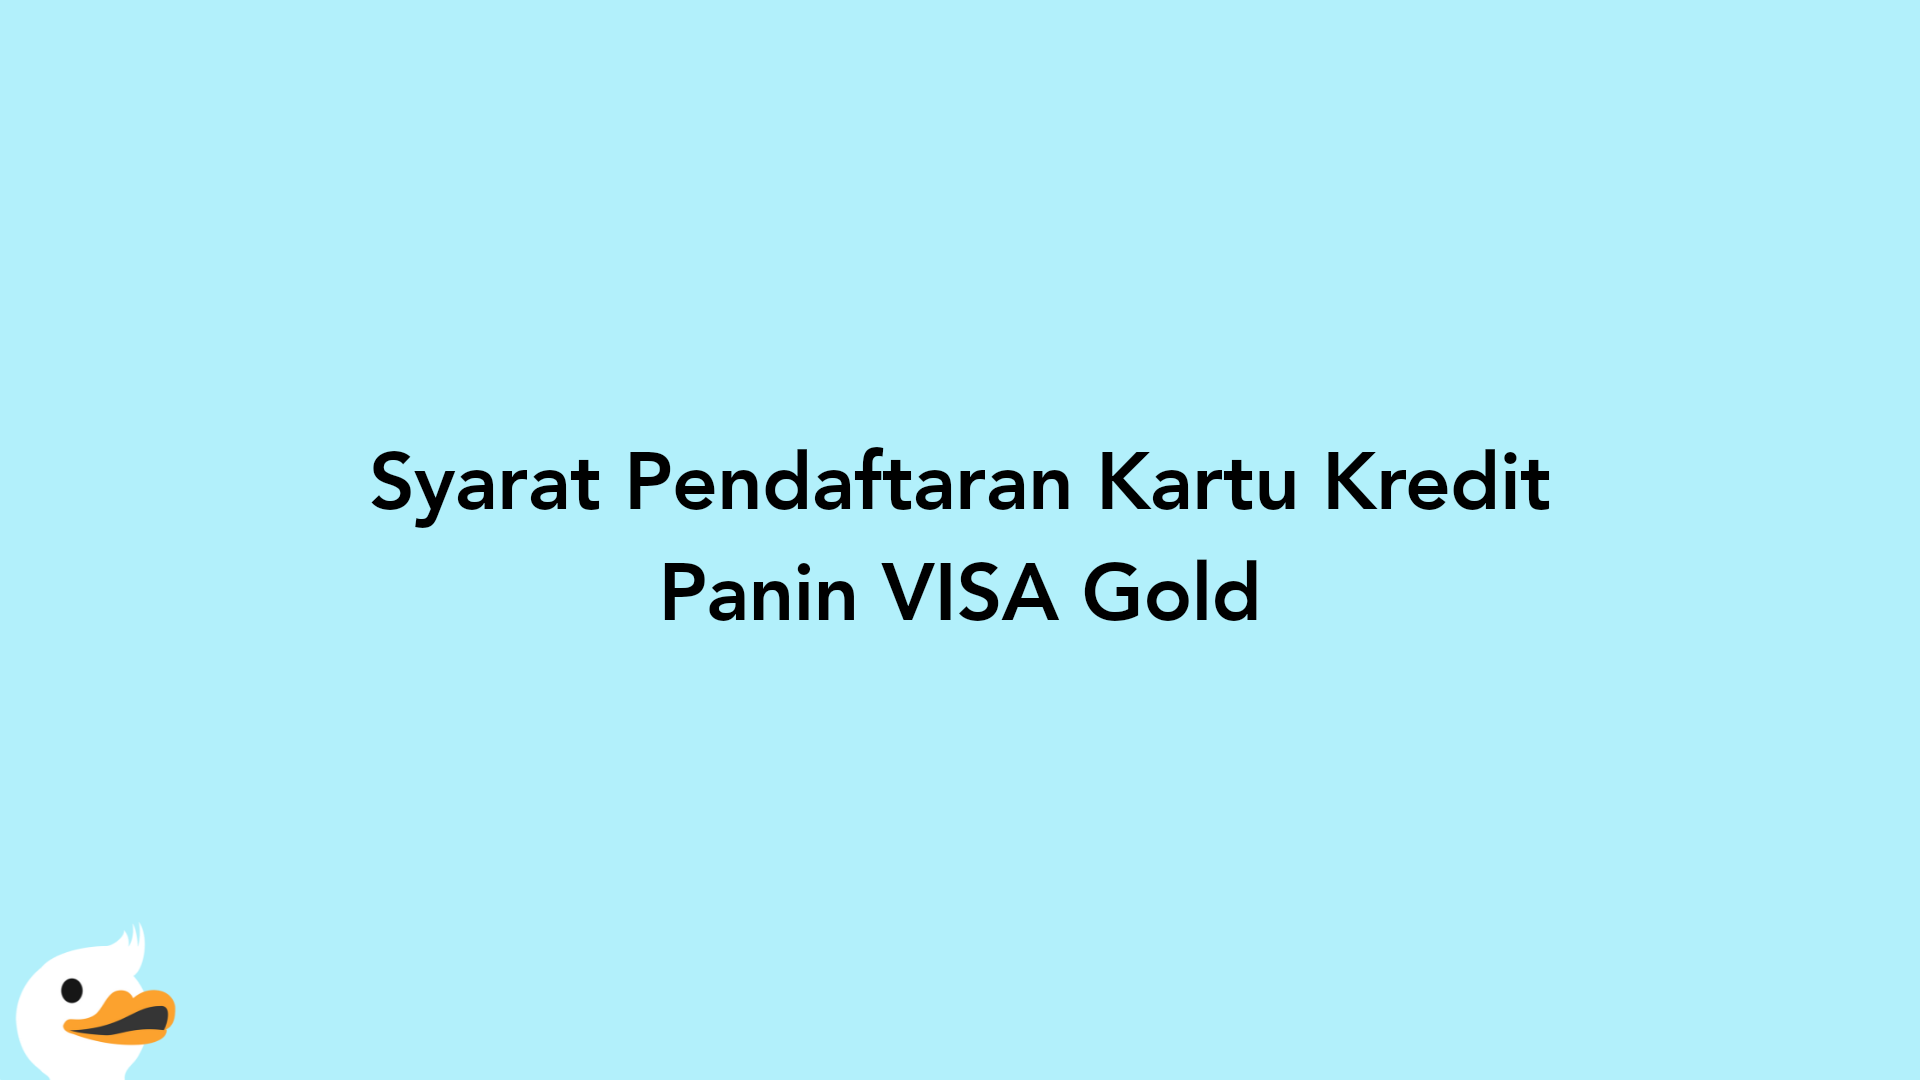 Syarat Pendaftaran Kartu Kredit Panin VISA Gold